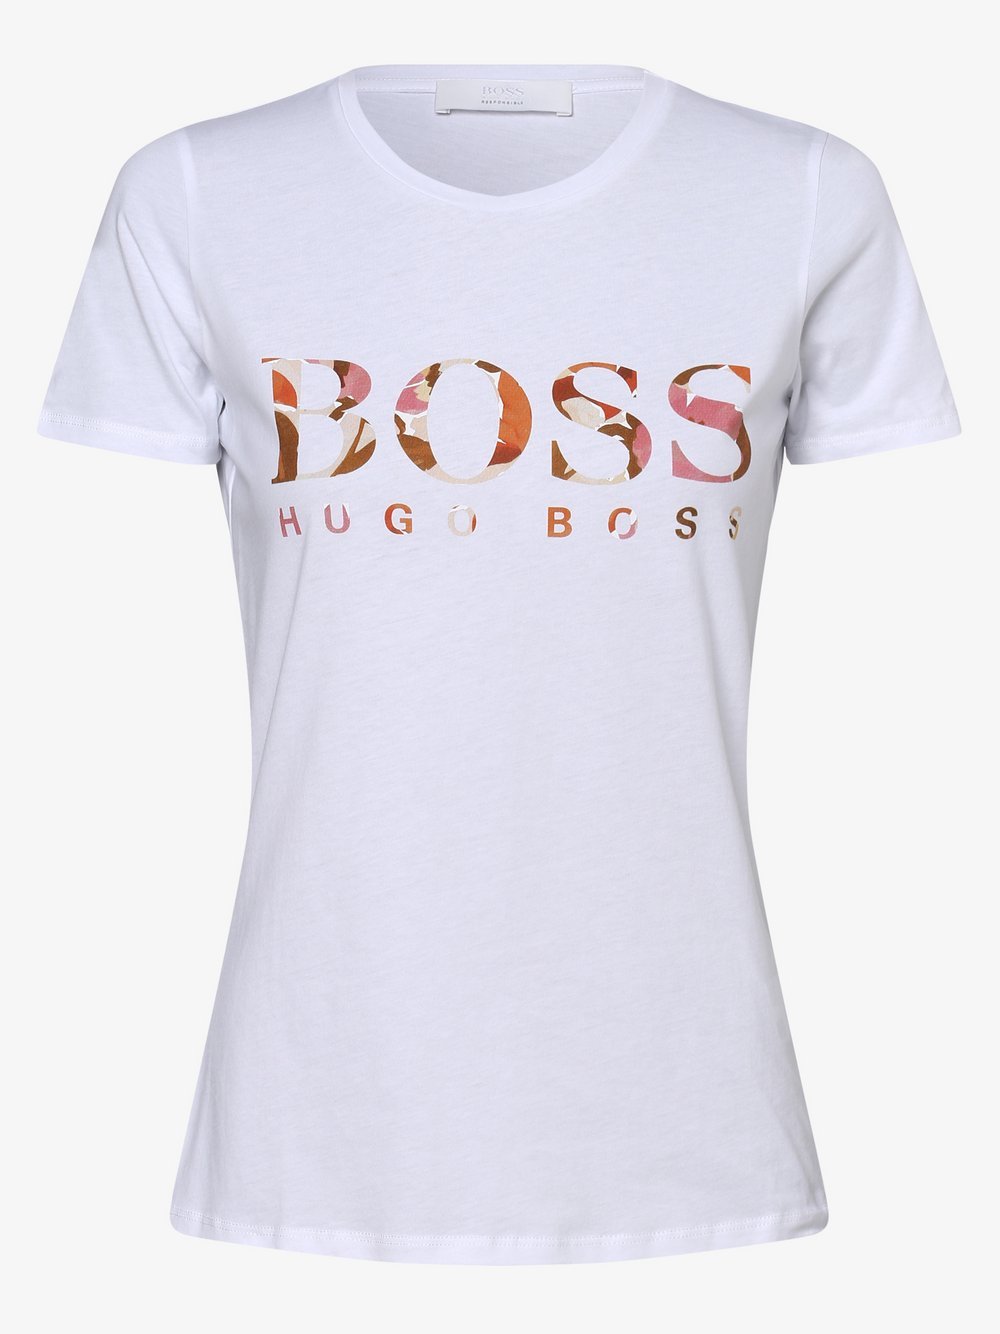 BOSS Casual - T-shirt damski – C_Etiboss1, biały